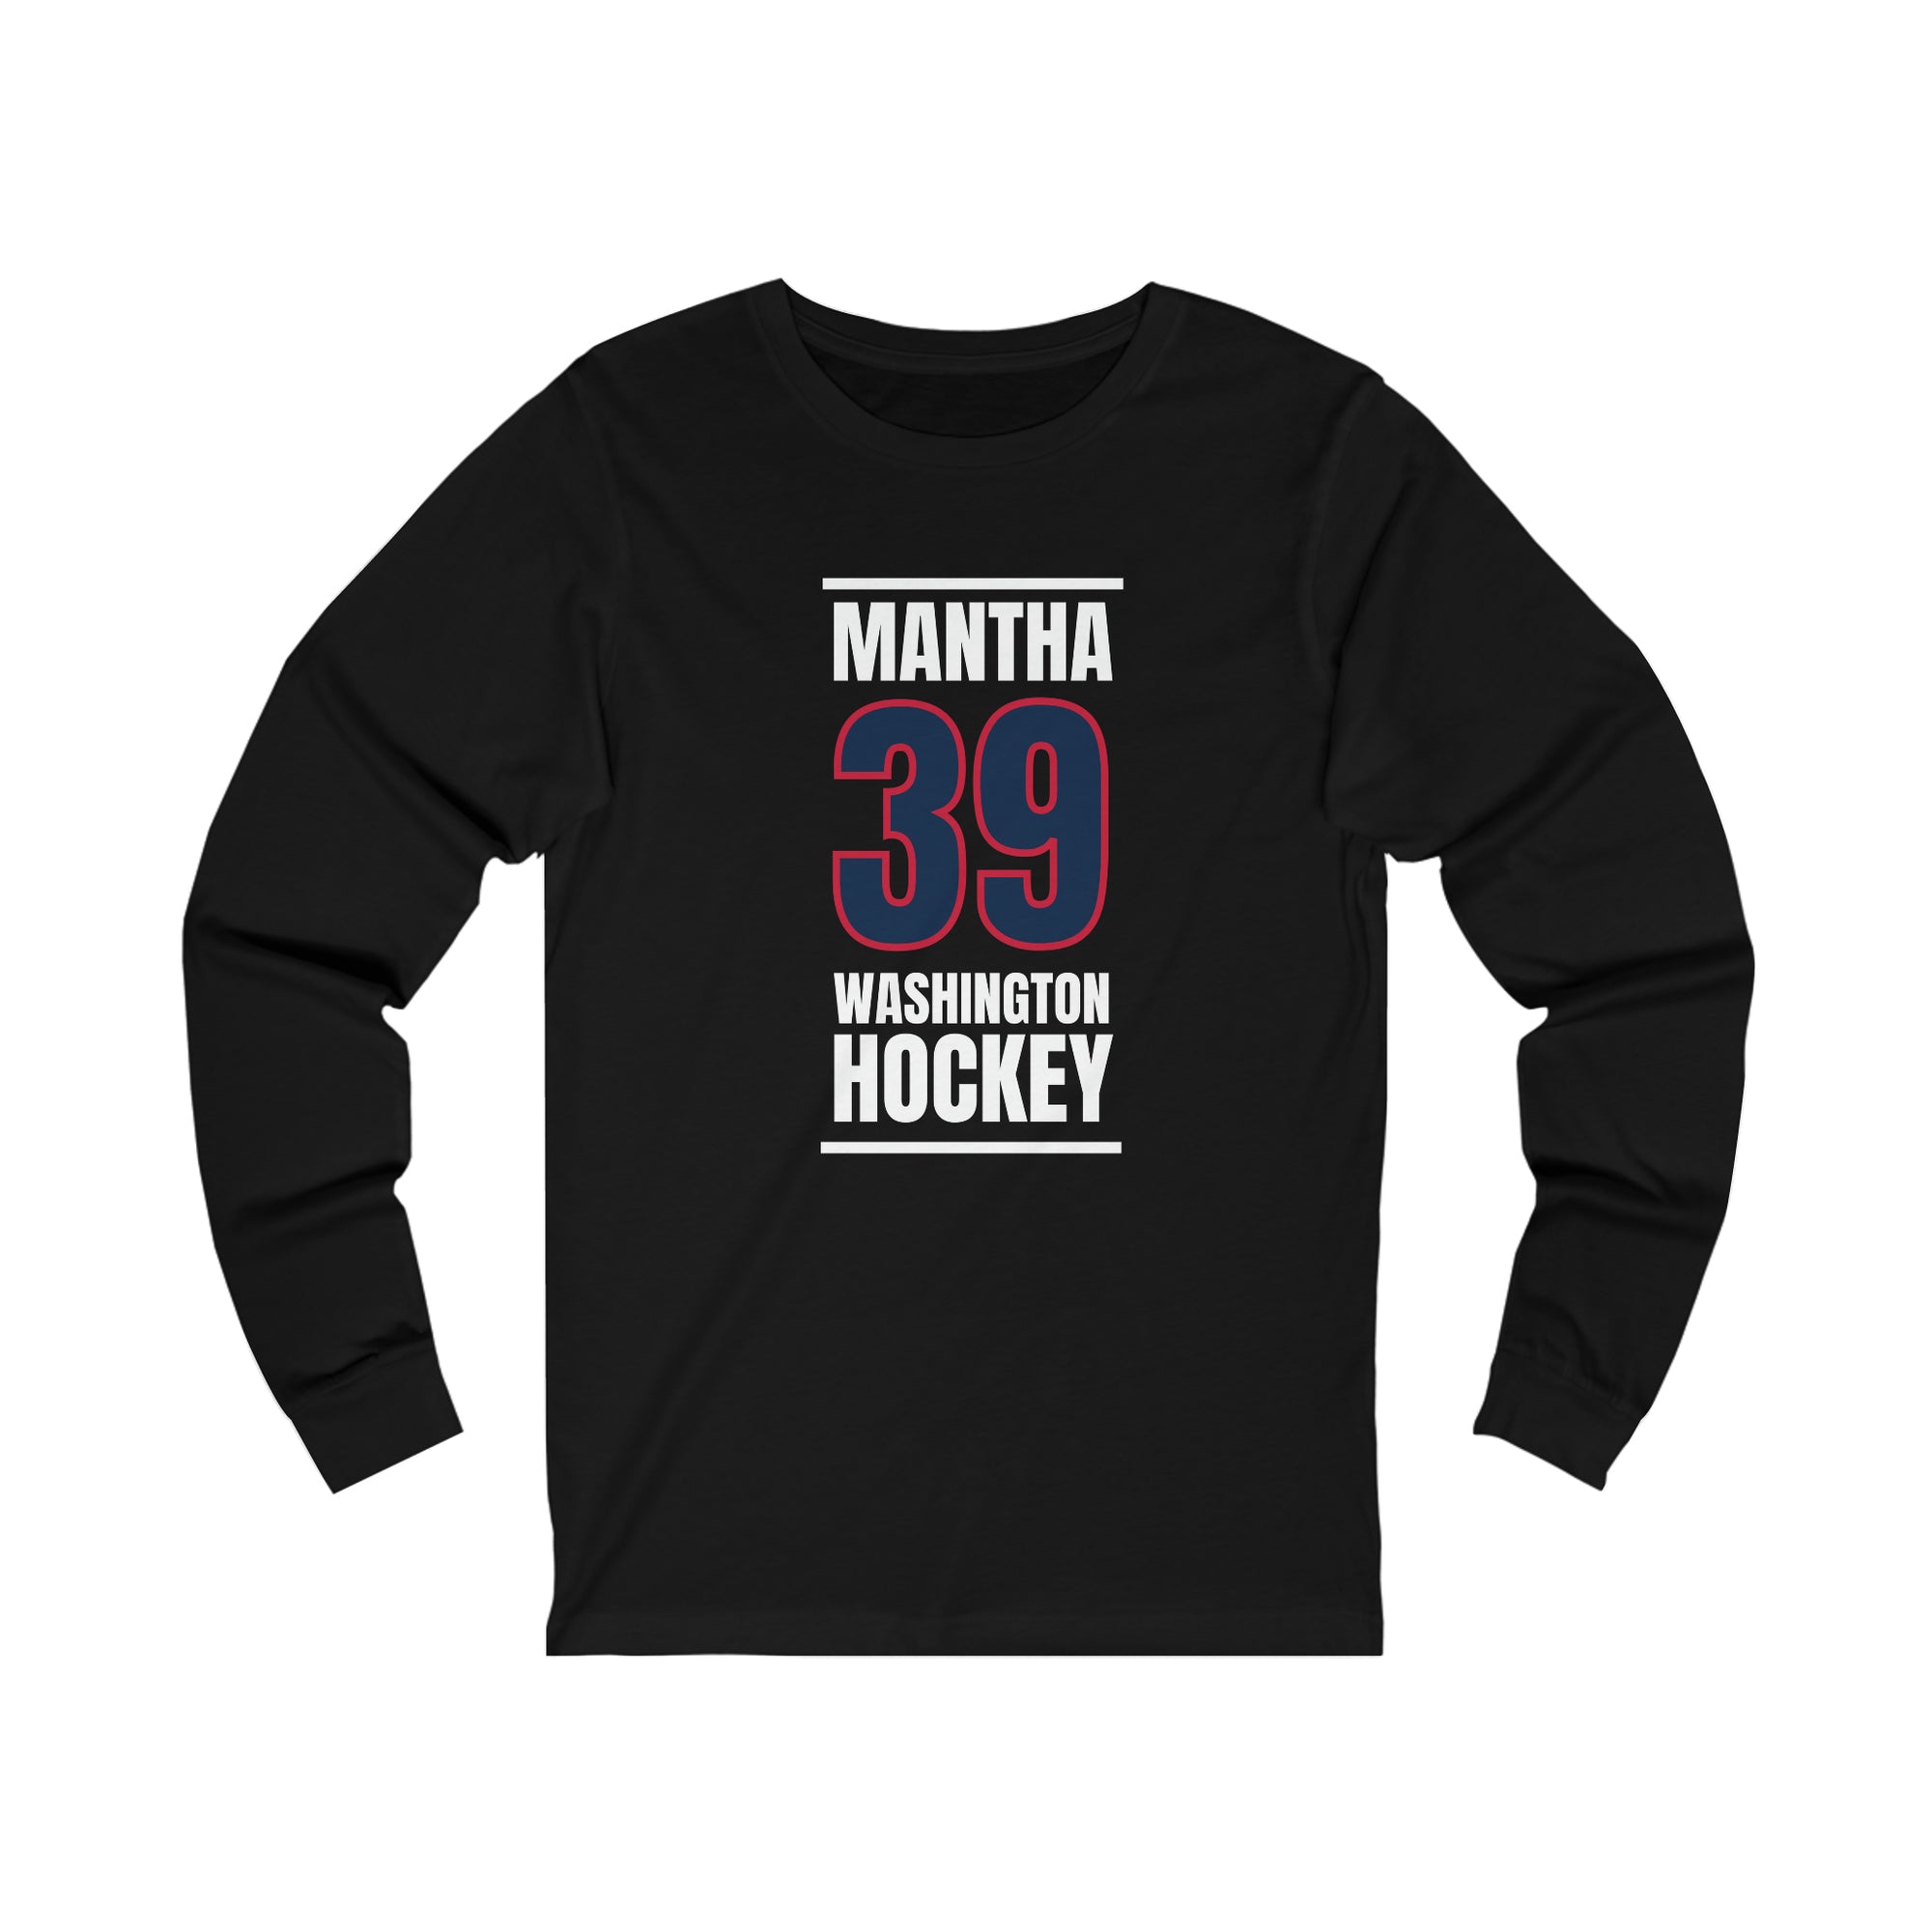 Mantha 39 Washington Hockey Navy Vertical Design Unisex Jersey Long Sleeve Shirt